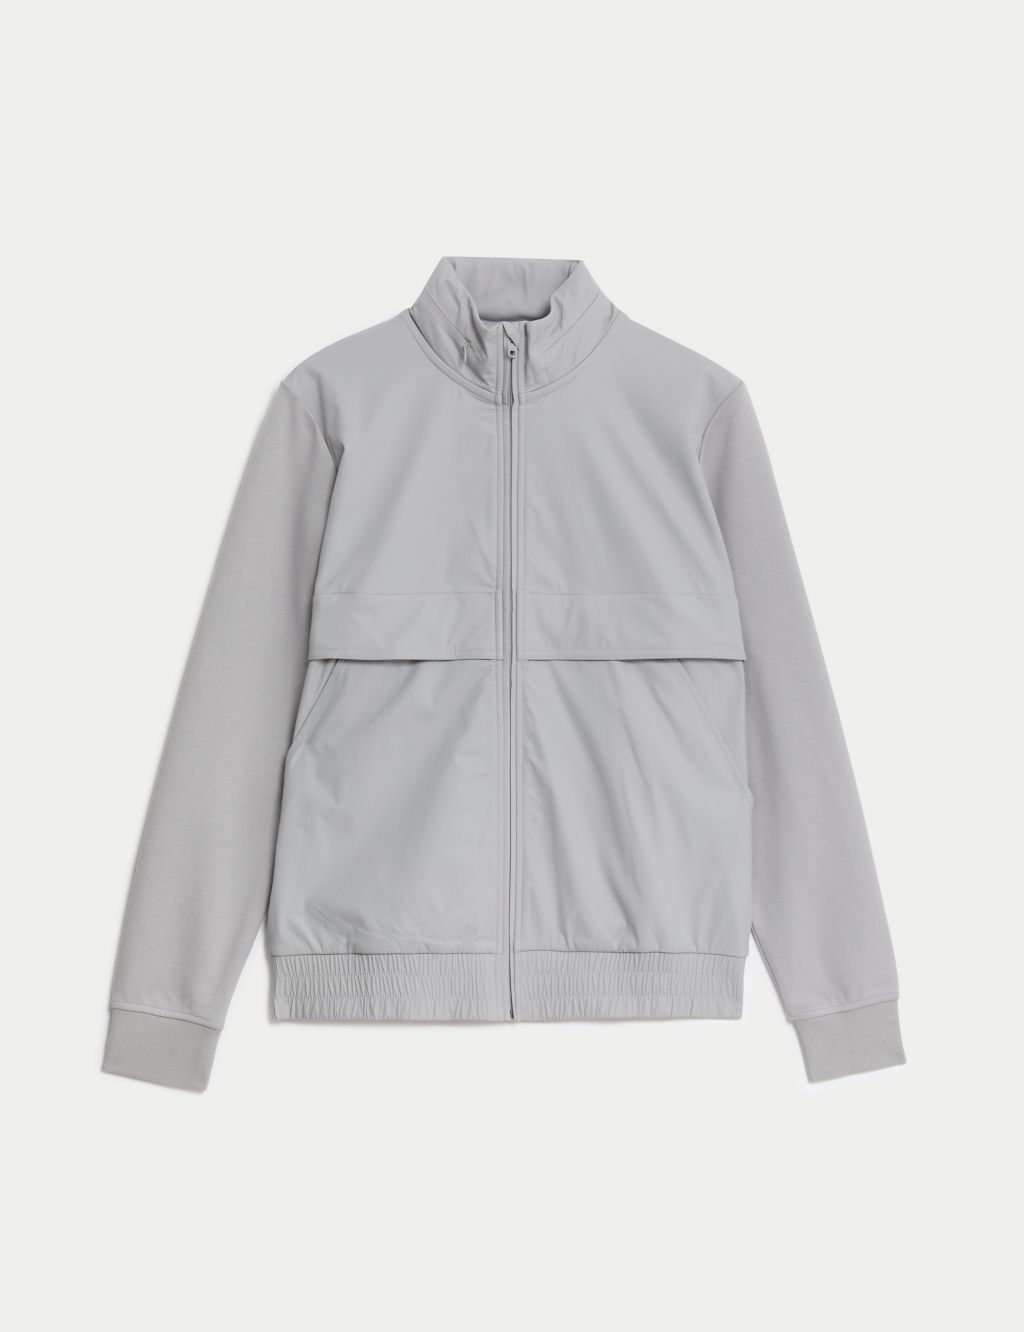 Packaway Hood Zip Up Jacket with Stormwear™ 1 of 9